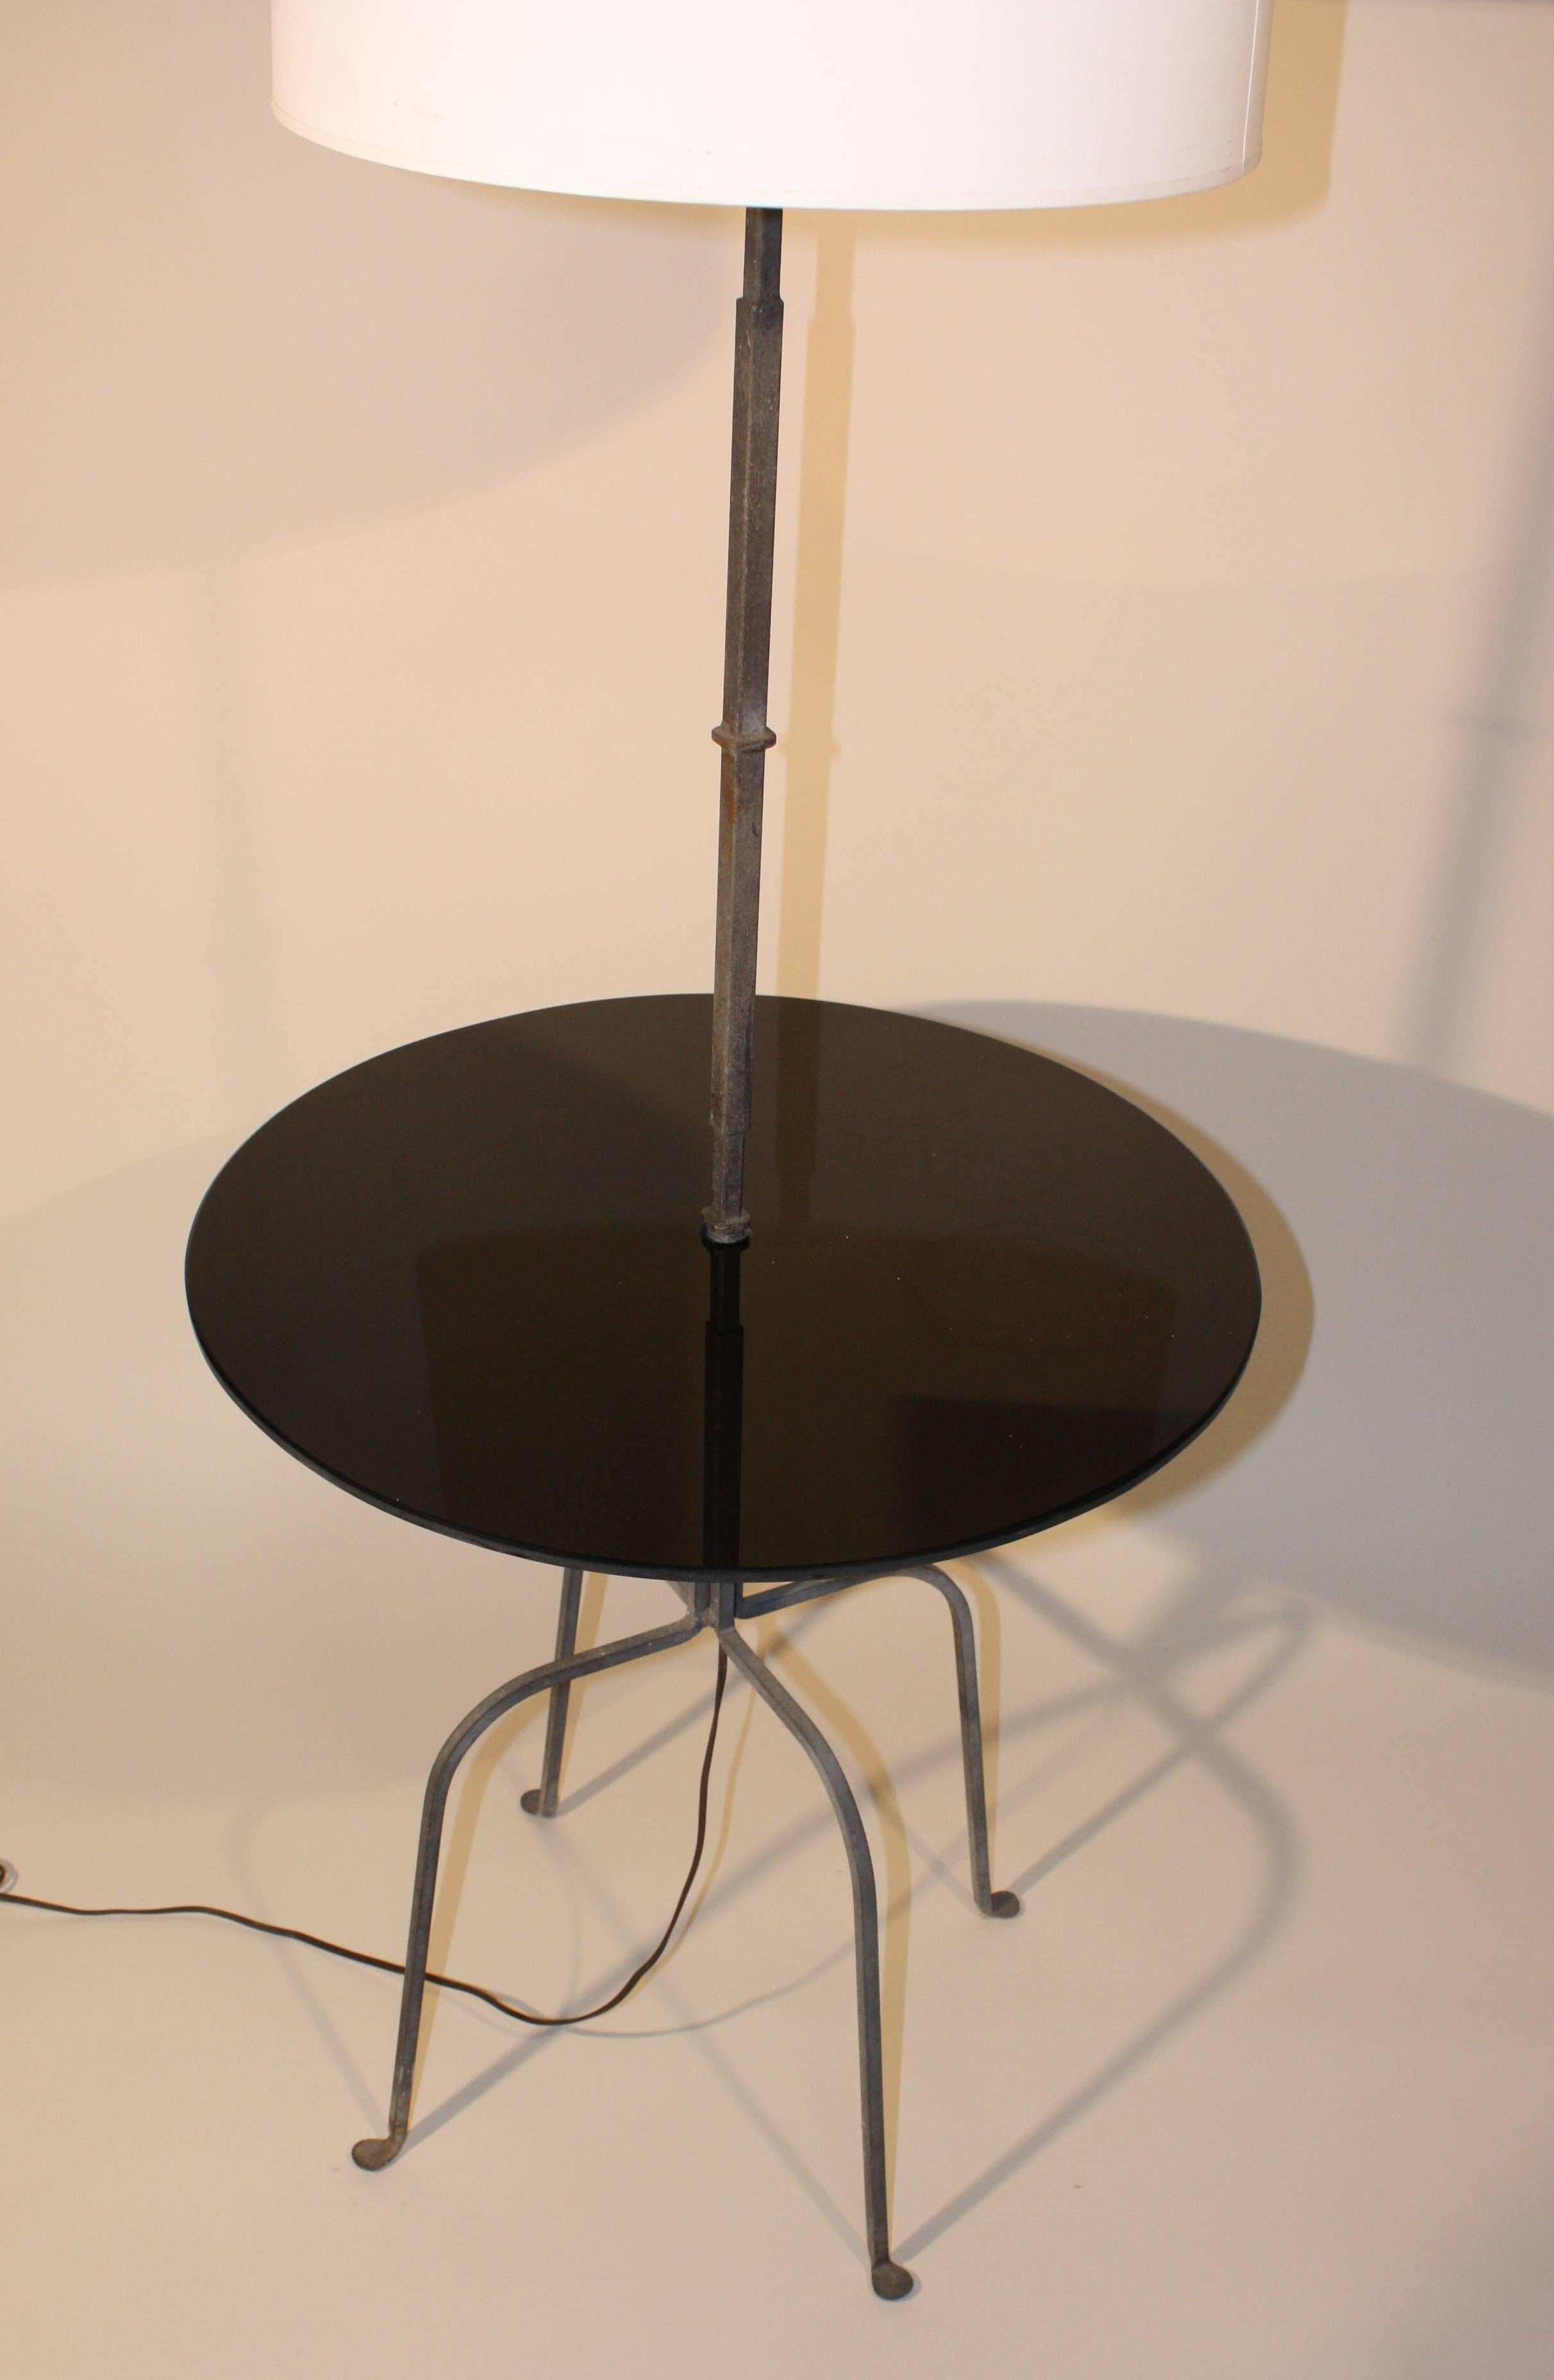 Hammered Modernist Lamp Table